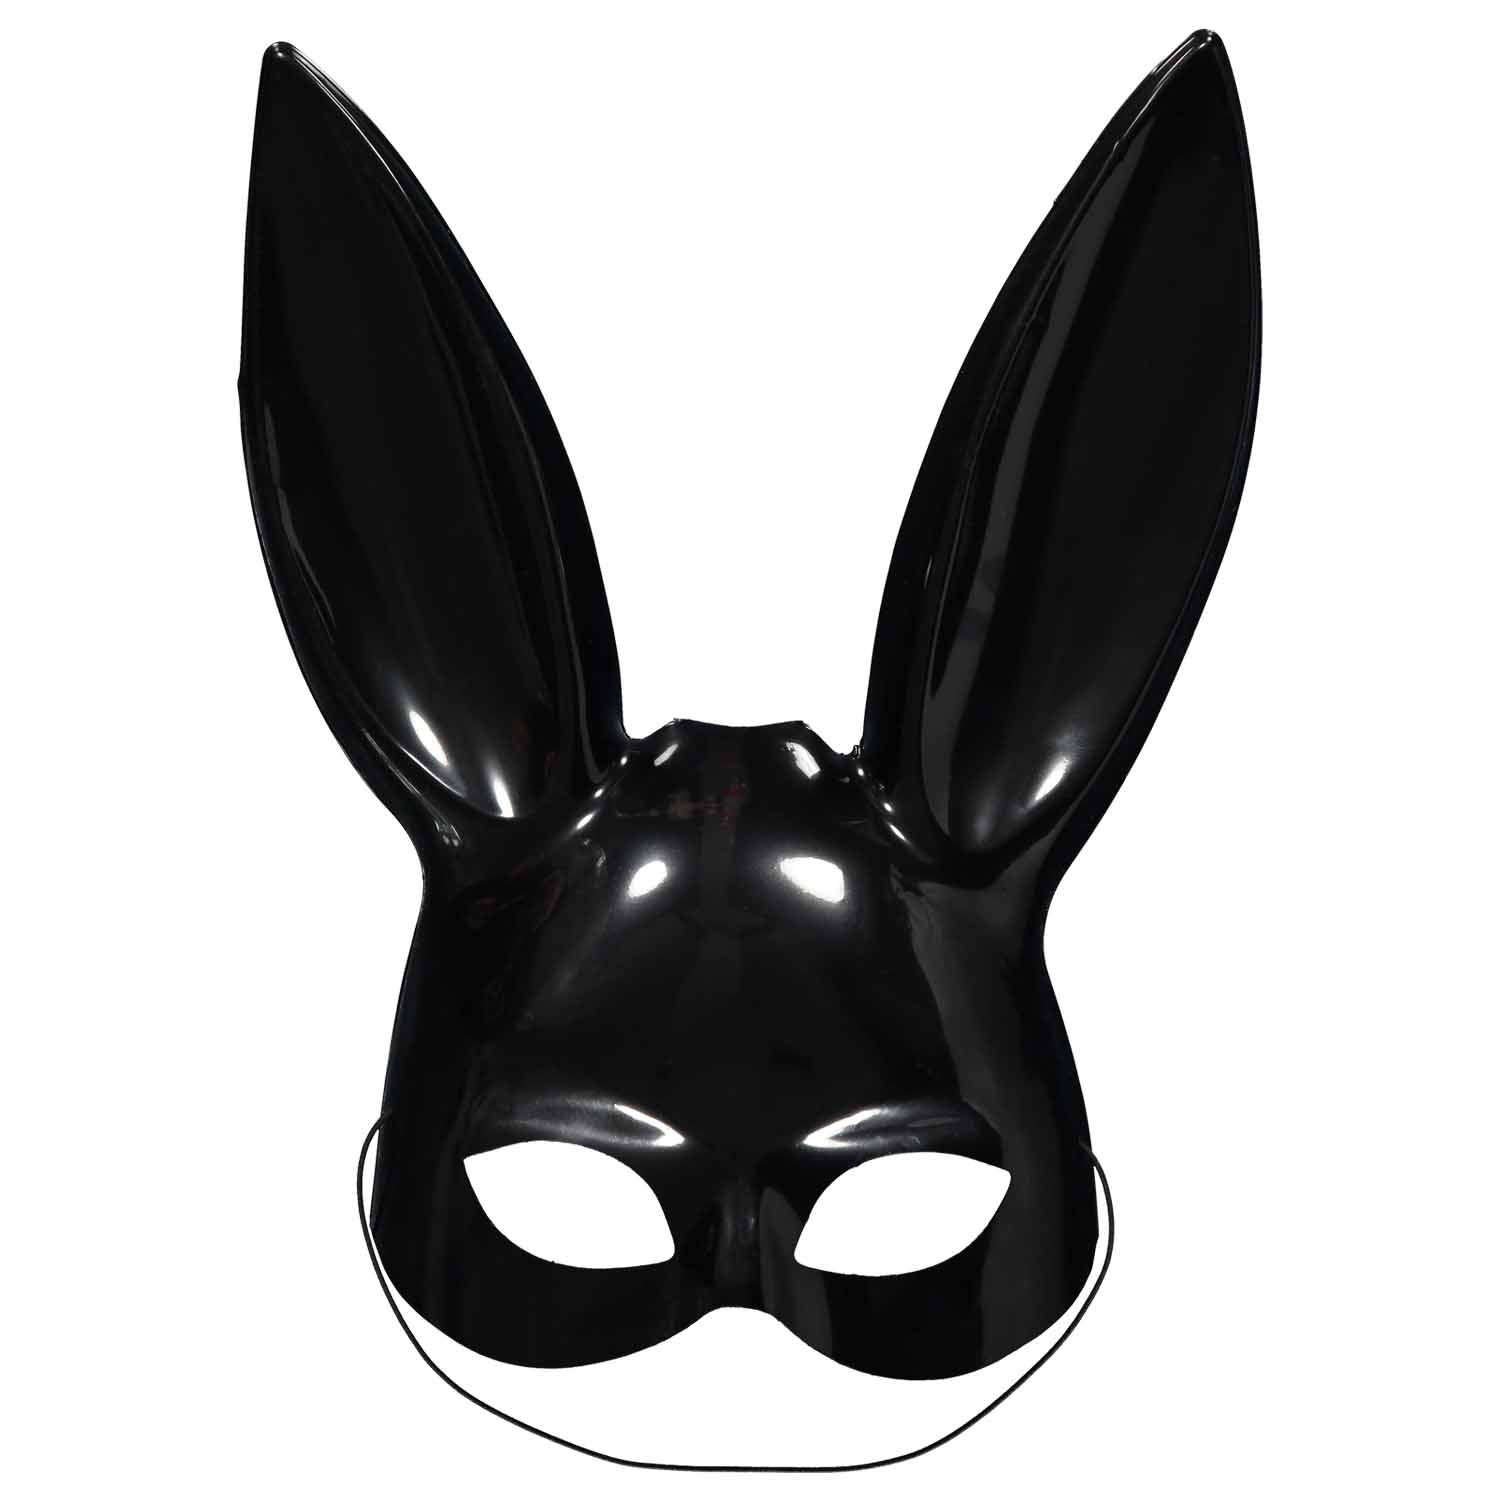 Bunny Half Mask Black